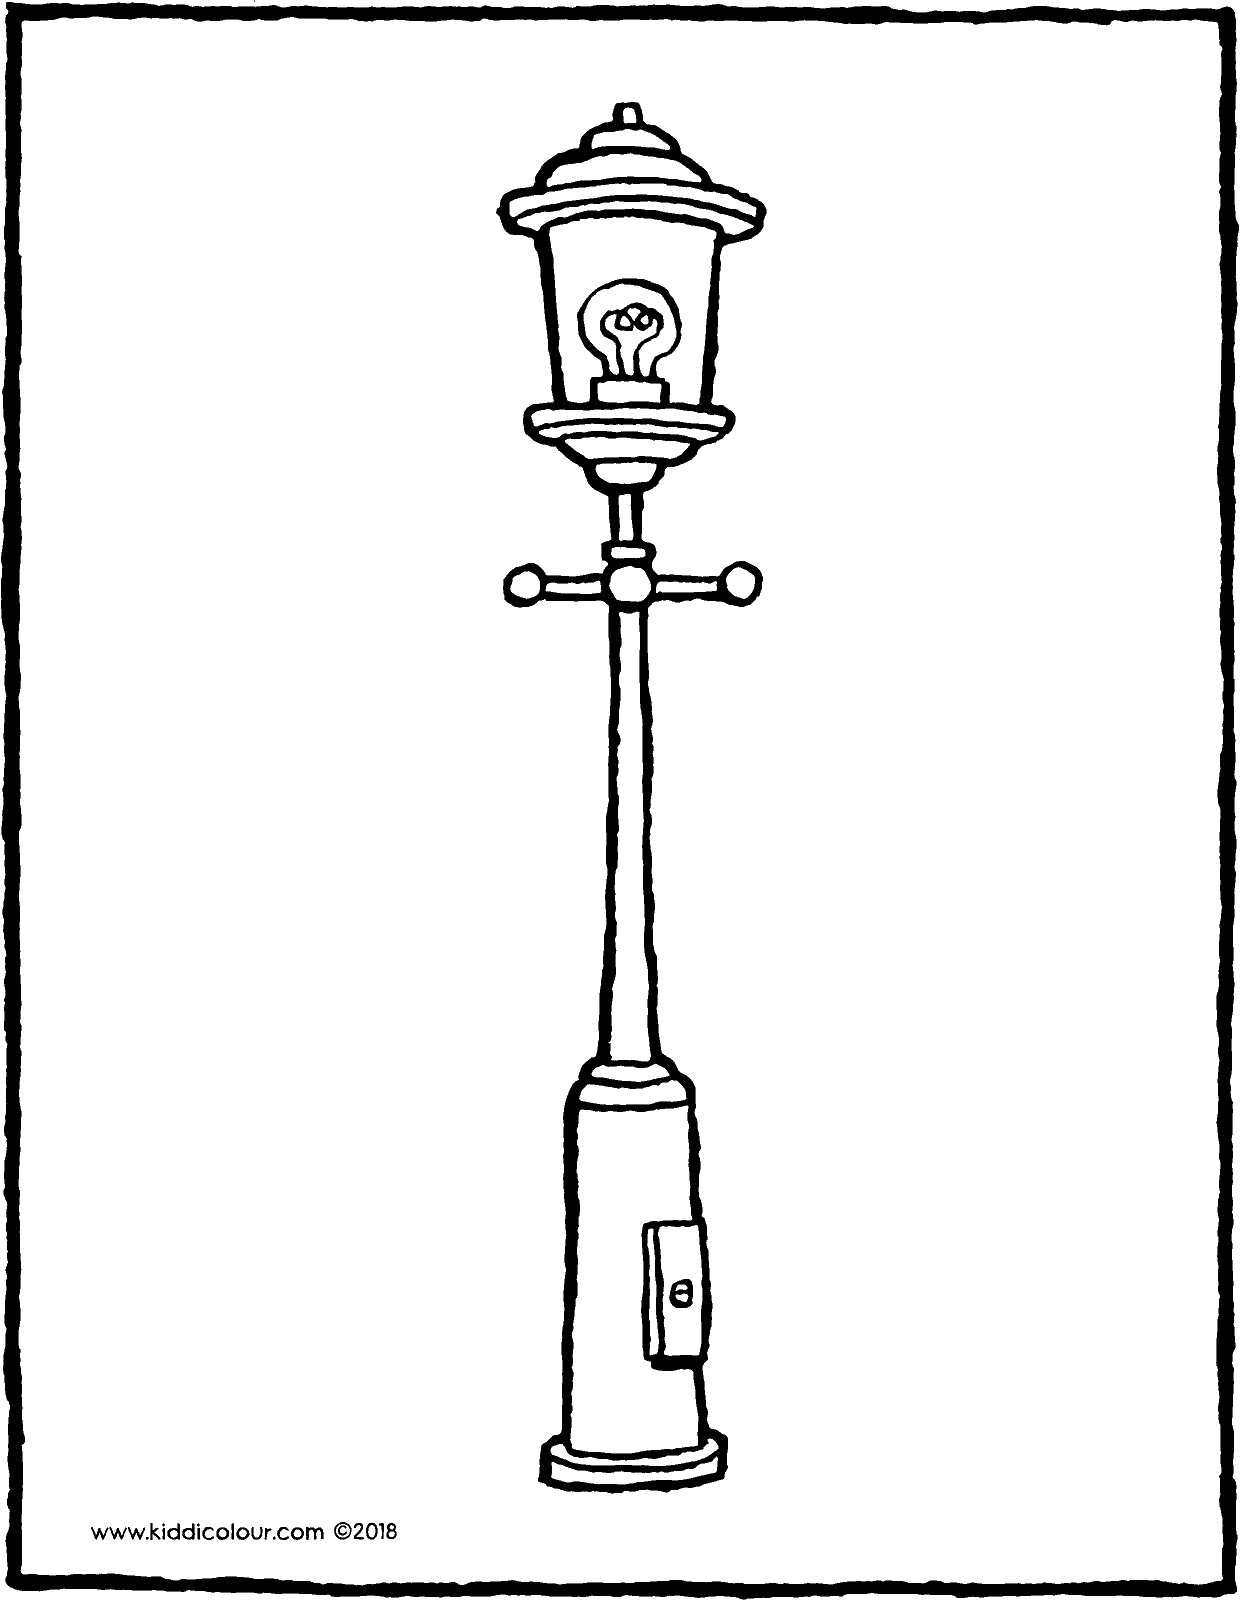 street lamp - kiddicolour